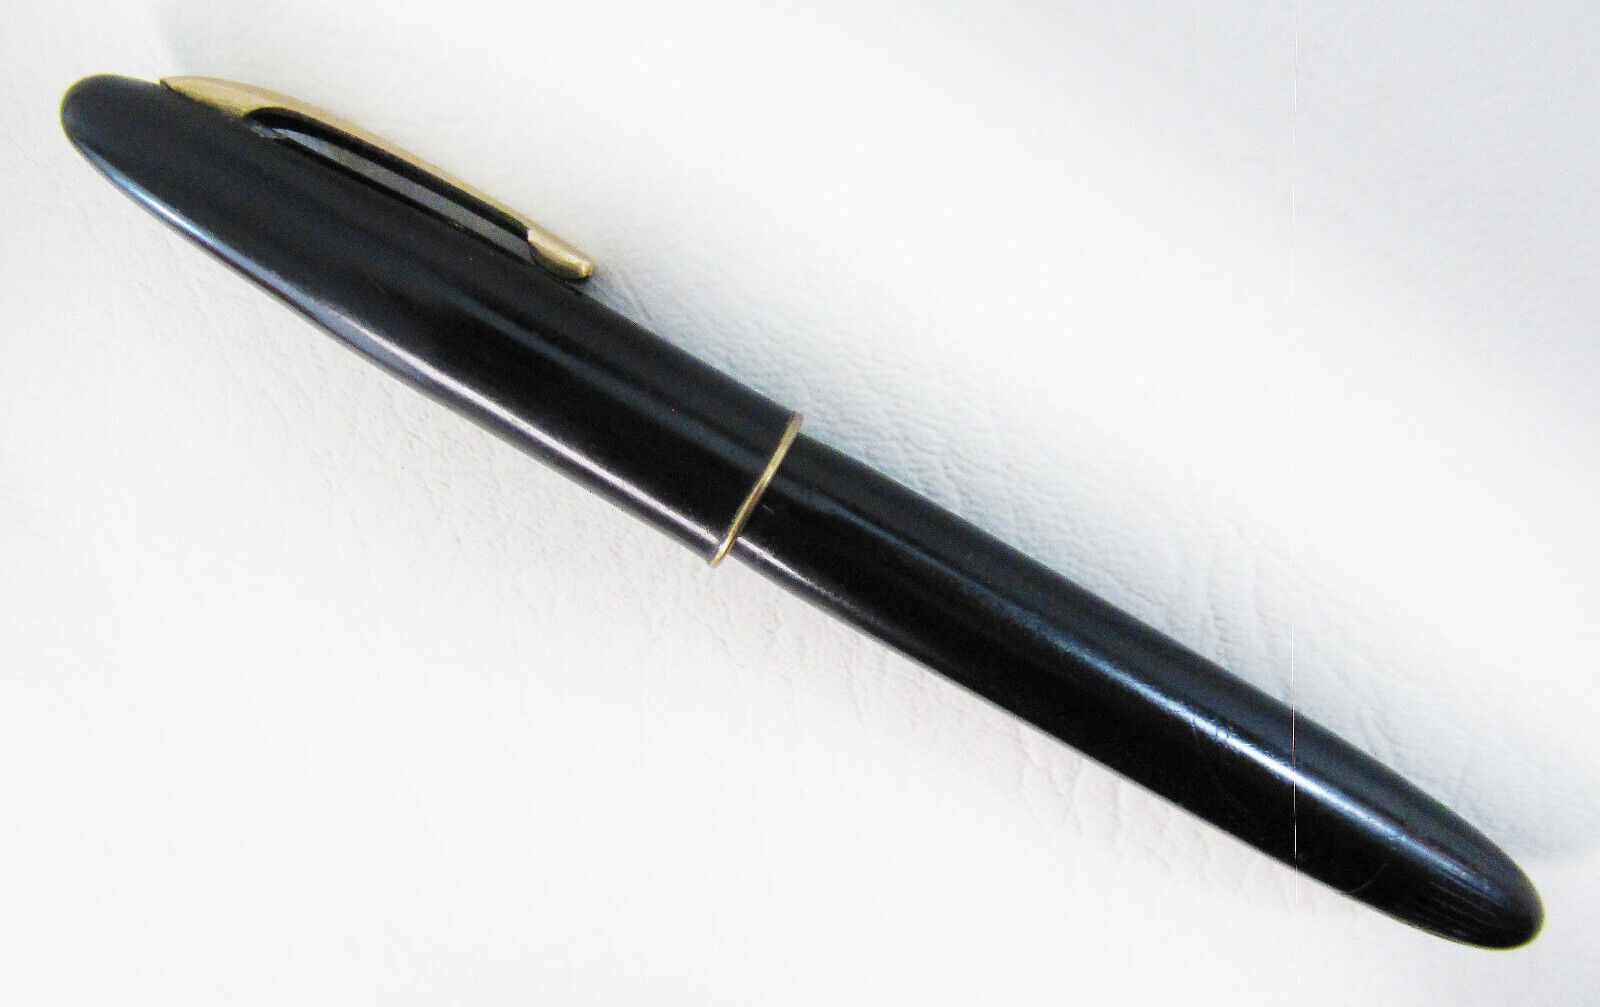 Vintage Schaeffer's Black And Gold Filled Pen With 14K Solid Gold Nib